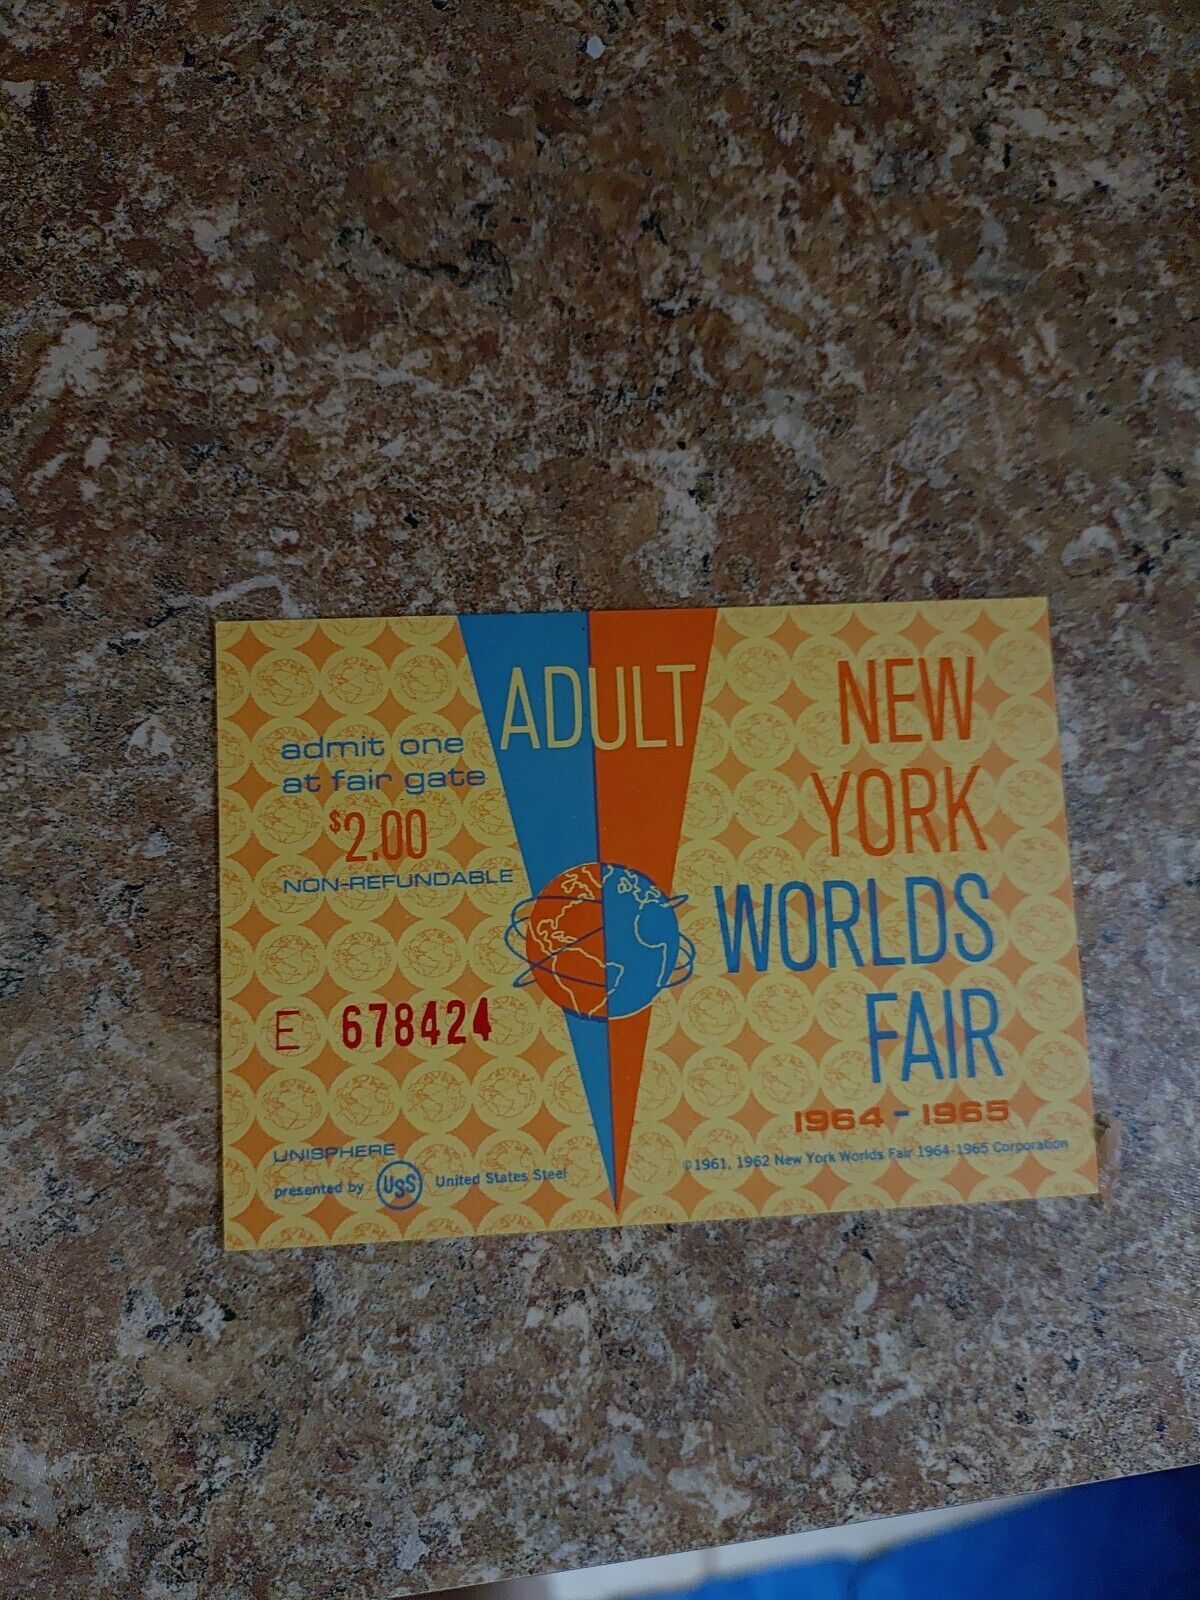  NEW YORK WORLDS FAIR 1964-1965  $2. ADULT TICKETS